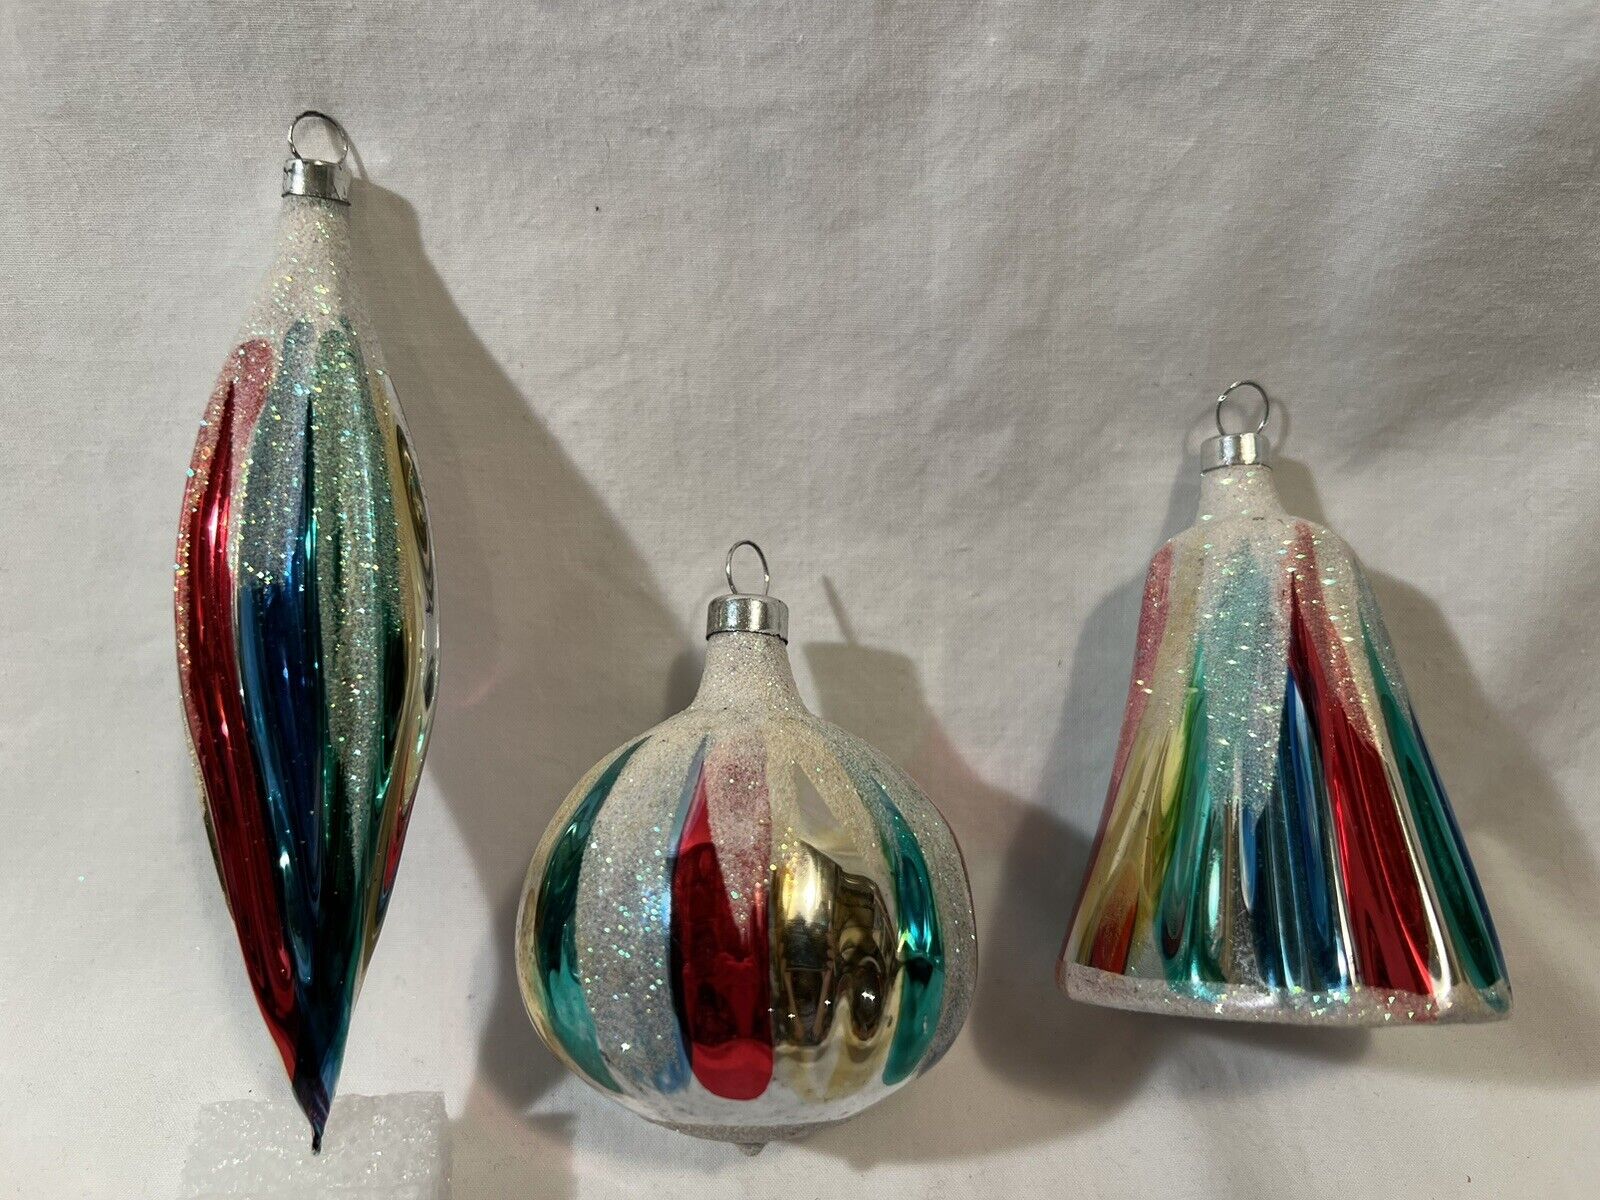 3 Vtg Bradford Handblown Glass Icicle Bell Ball Ornaments Red,Blue,Green, Gold